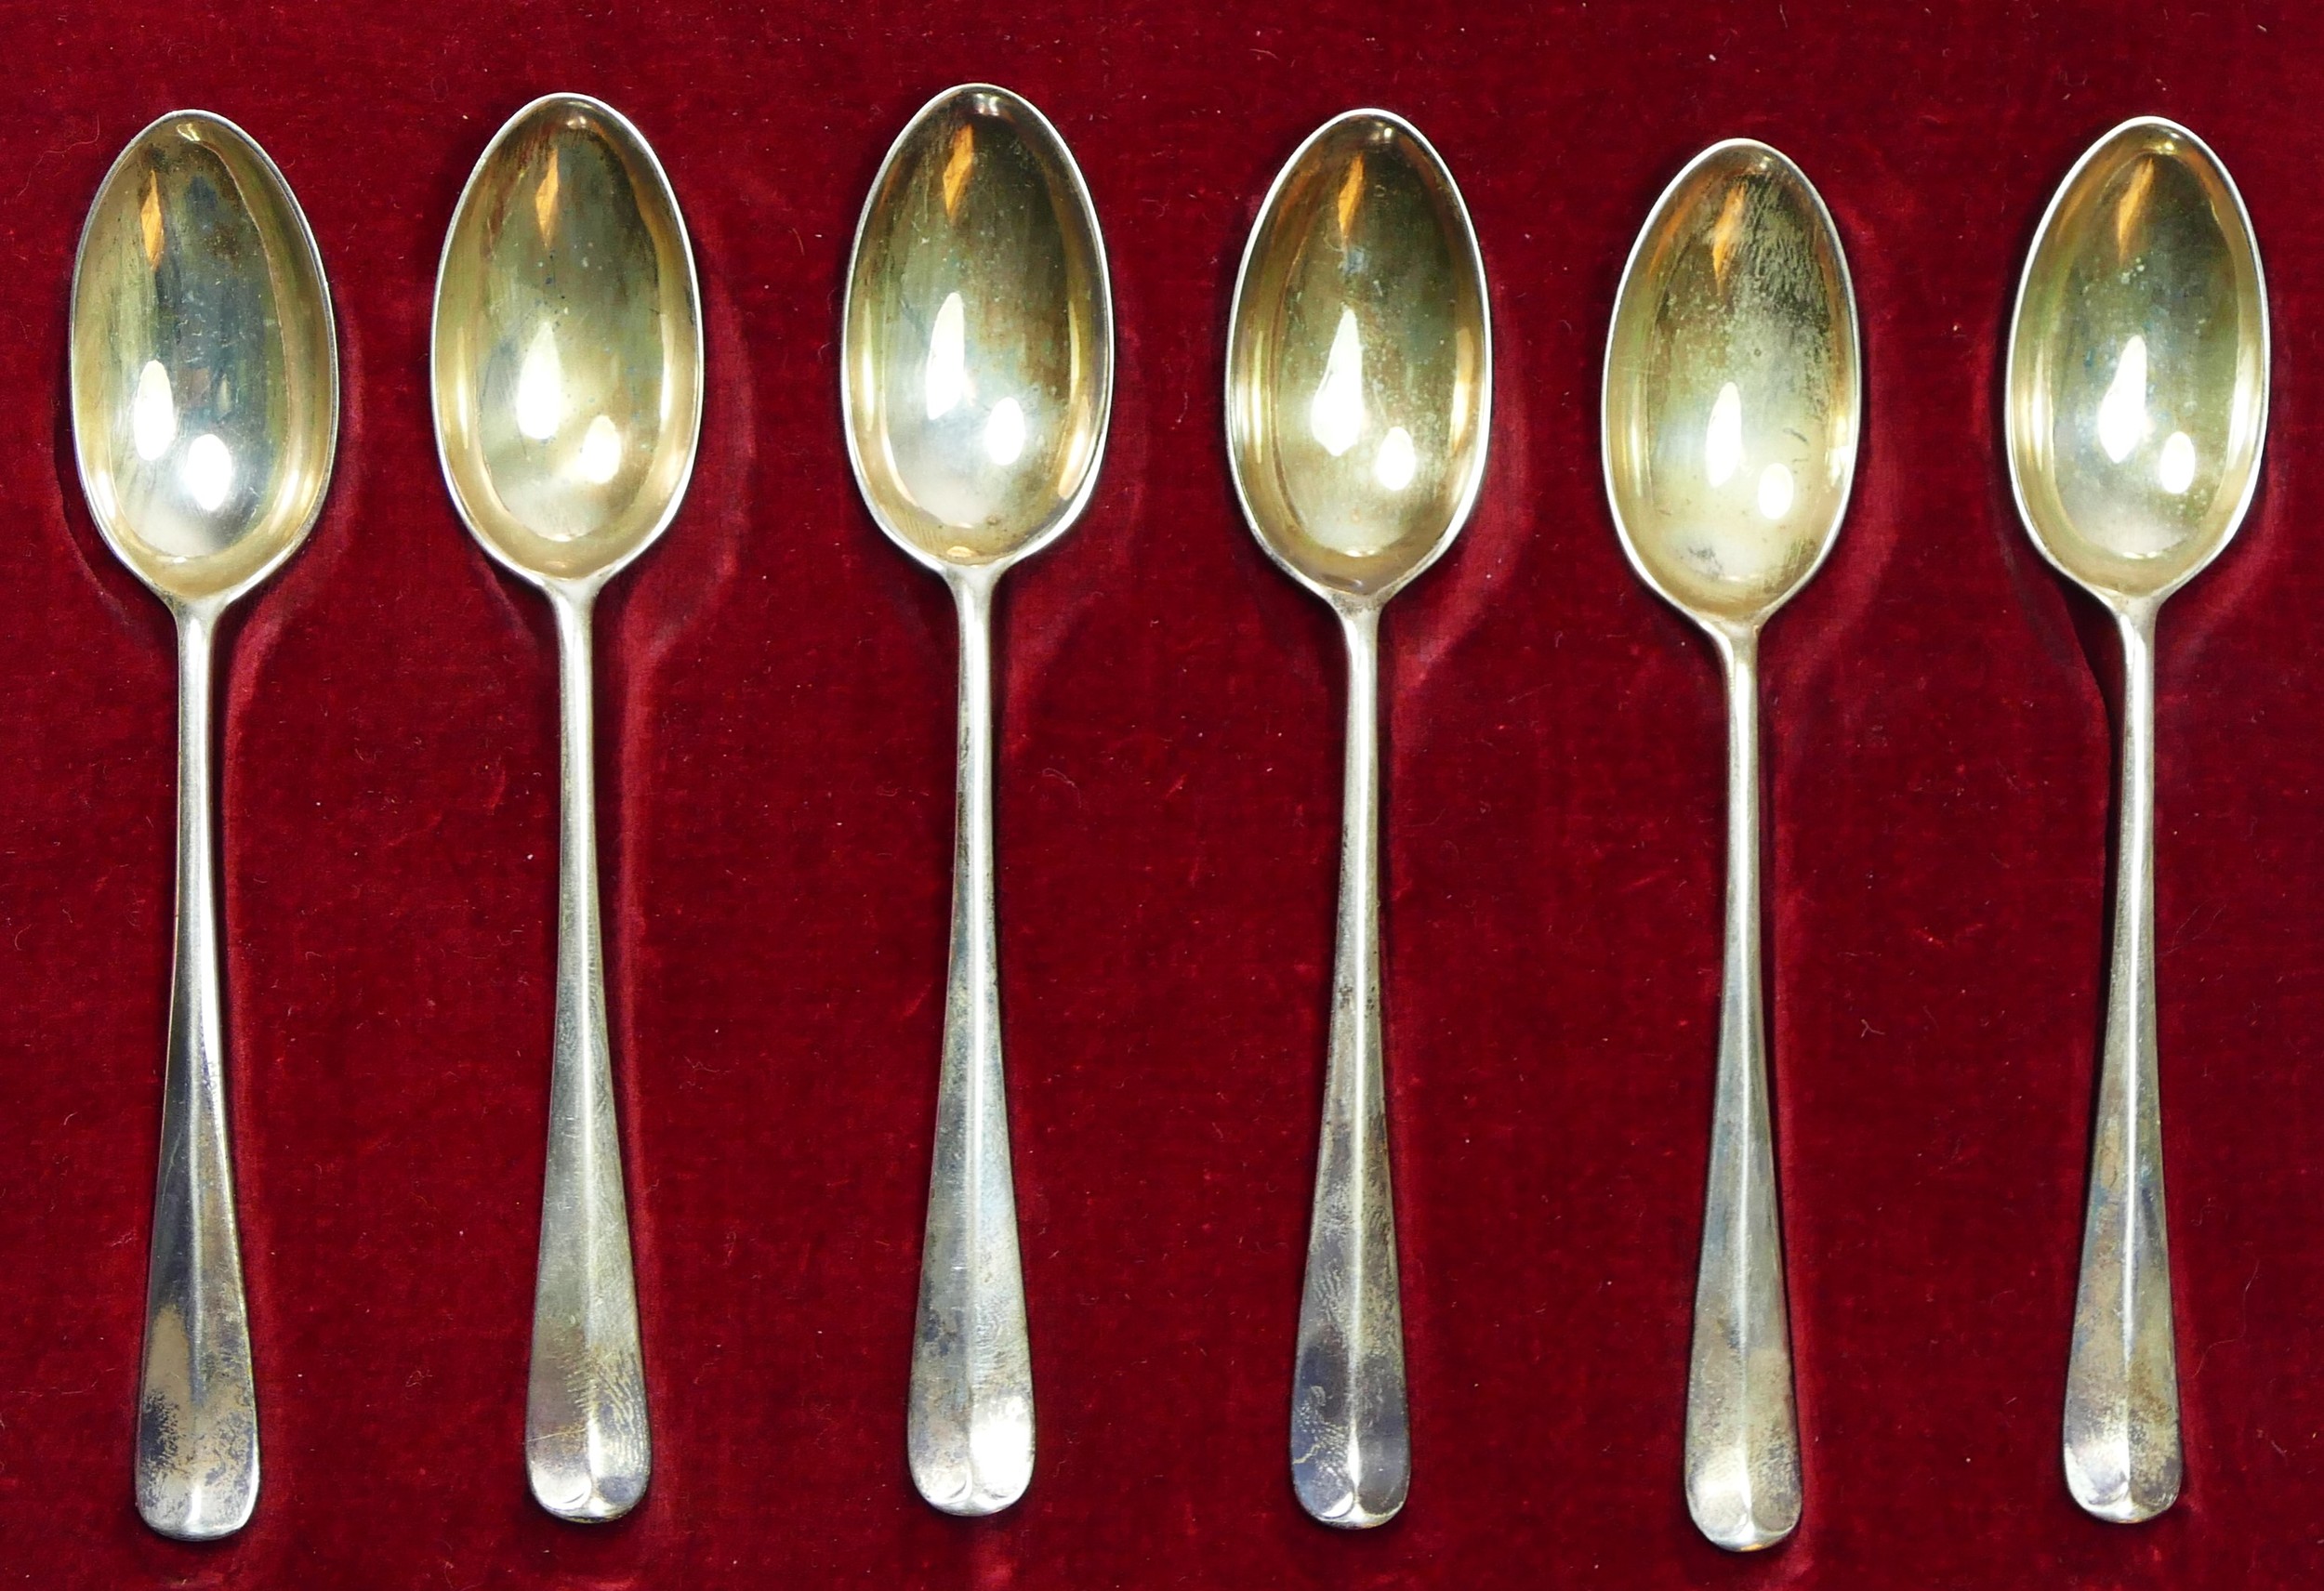 A silver set of British Hallmark tea spoons, 1953, Coronation mark, case - Image 2 of 3